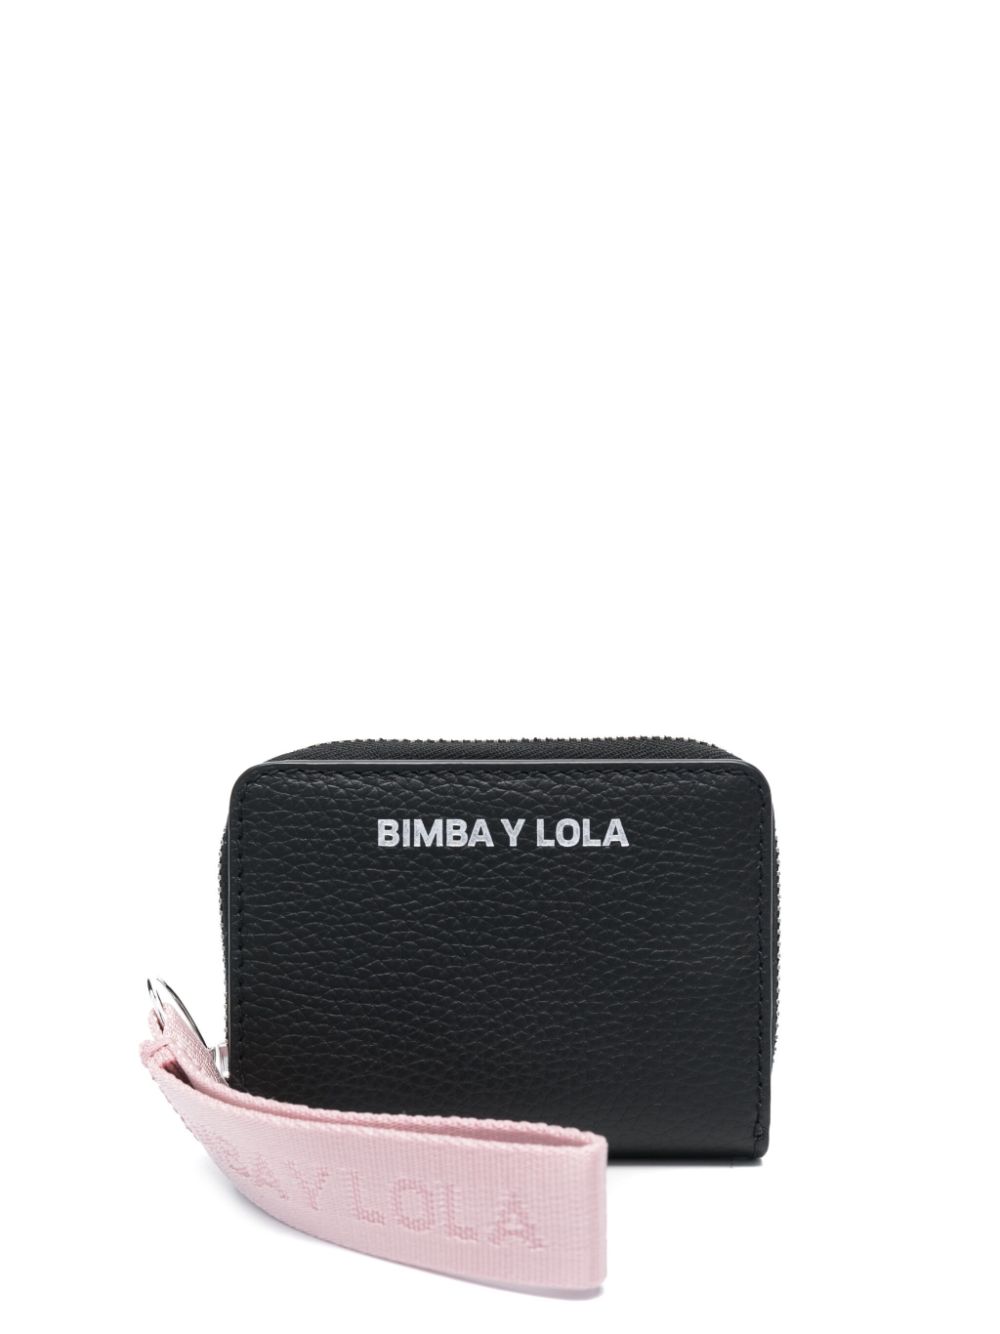 Bimba y Lola logo-print leather wallet - Black